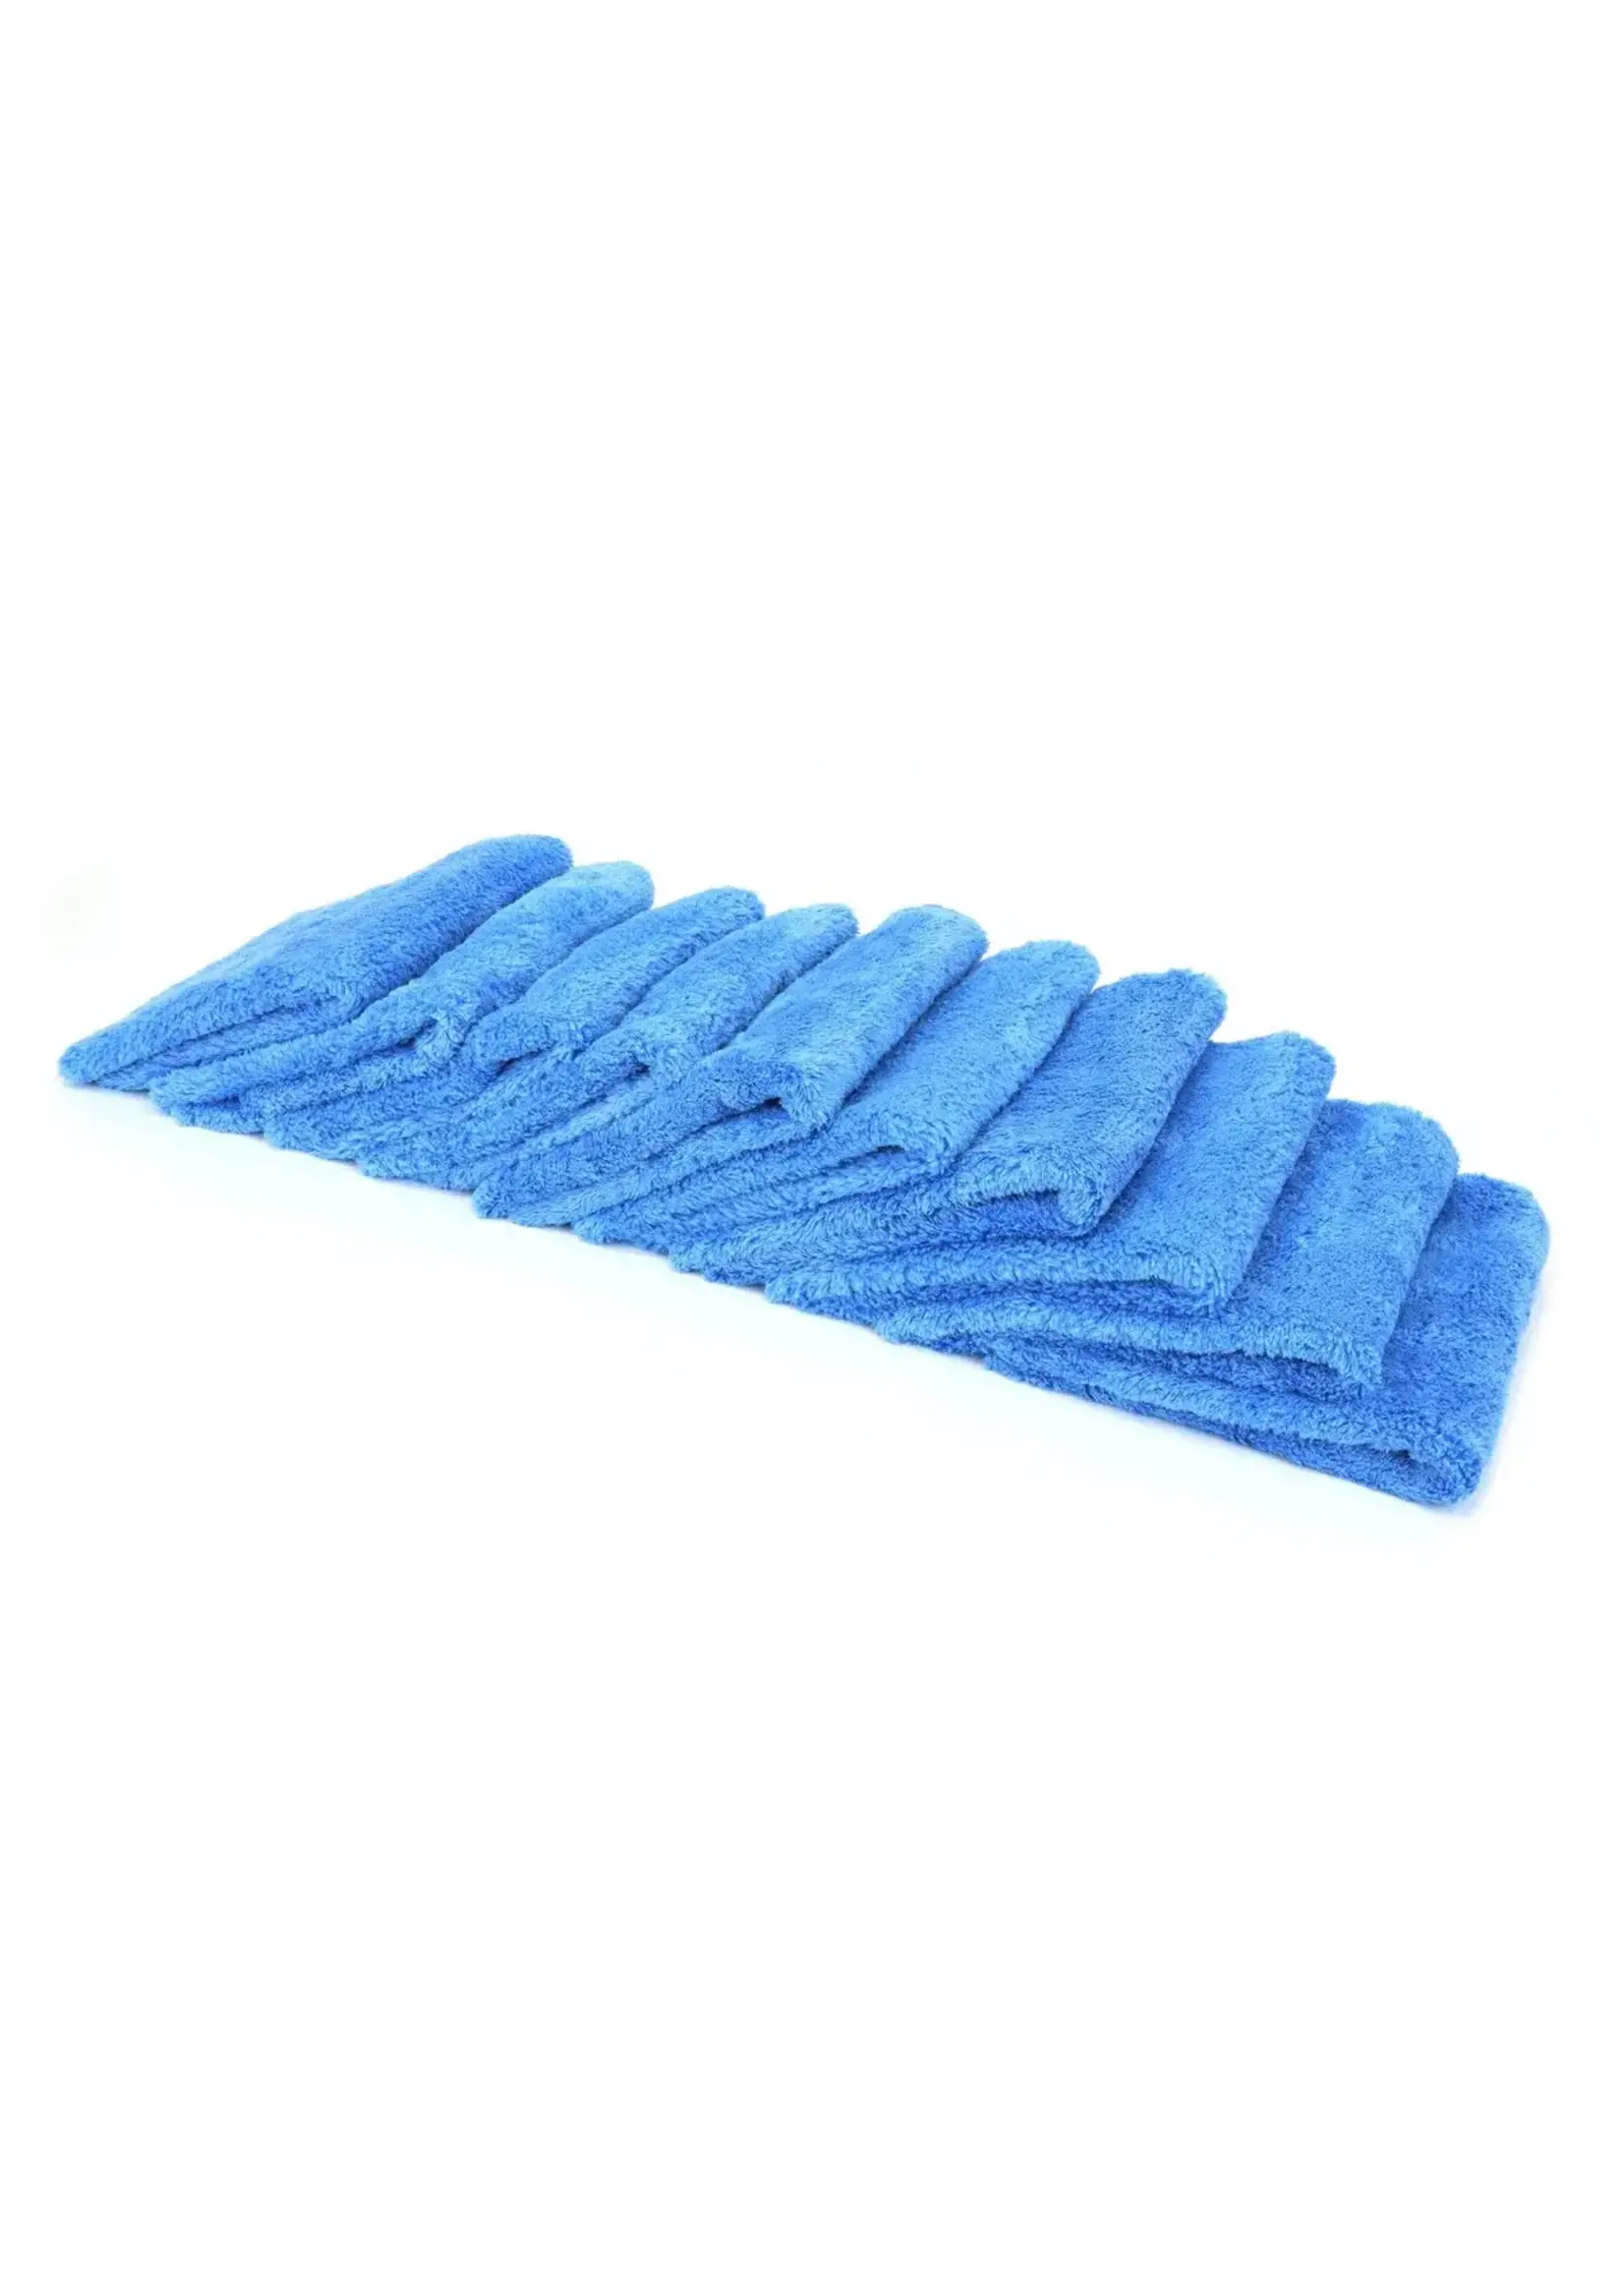 Autofiber Korean 470 Plush Towel Blue - 10 Pack